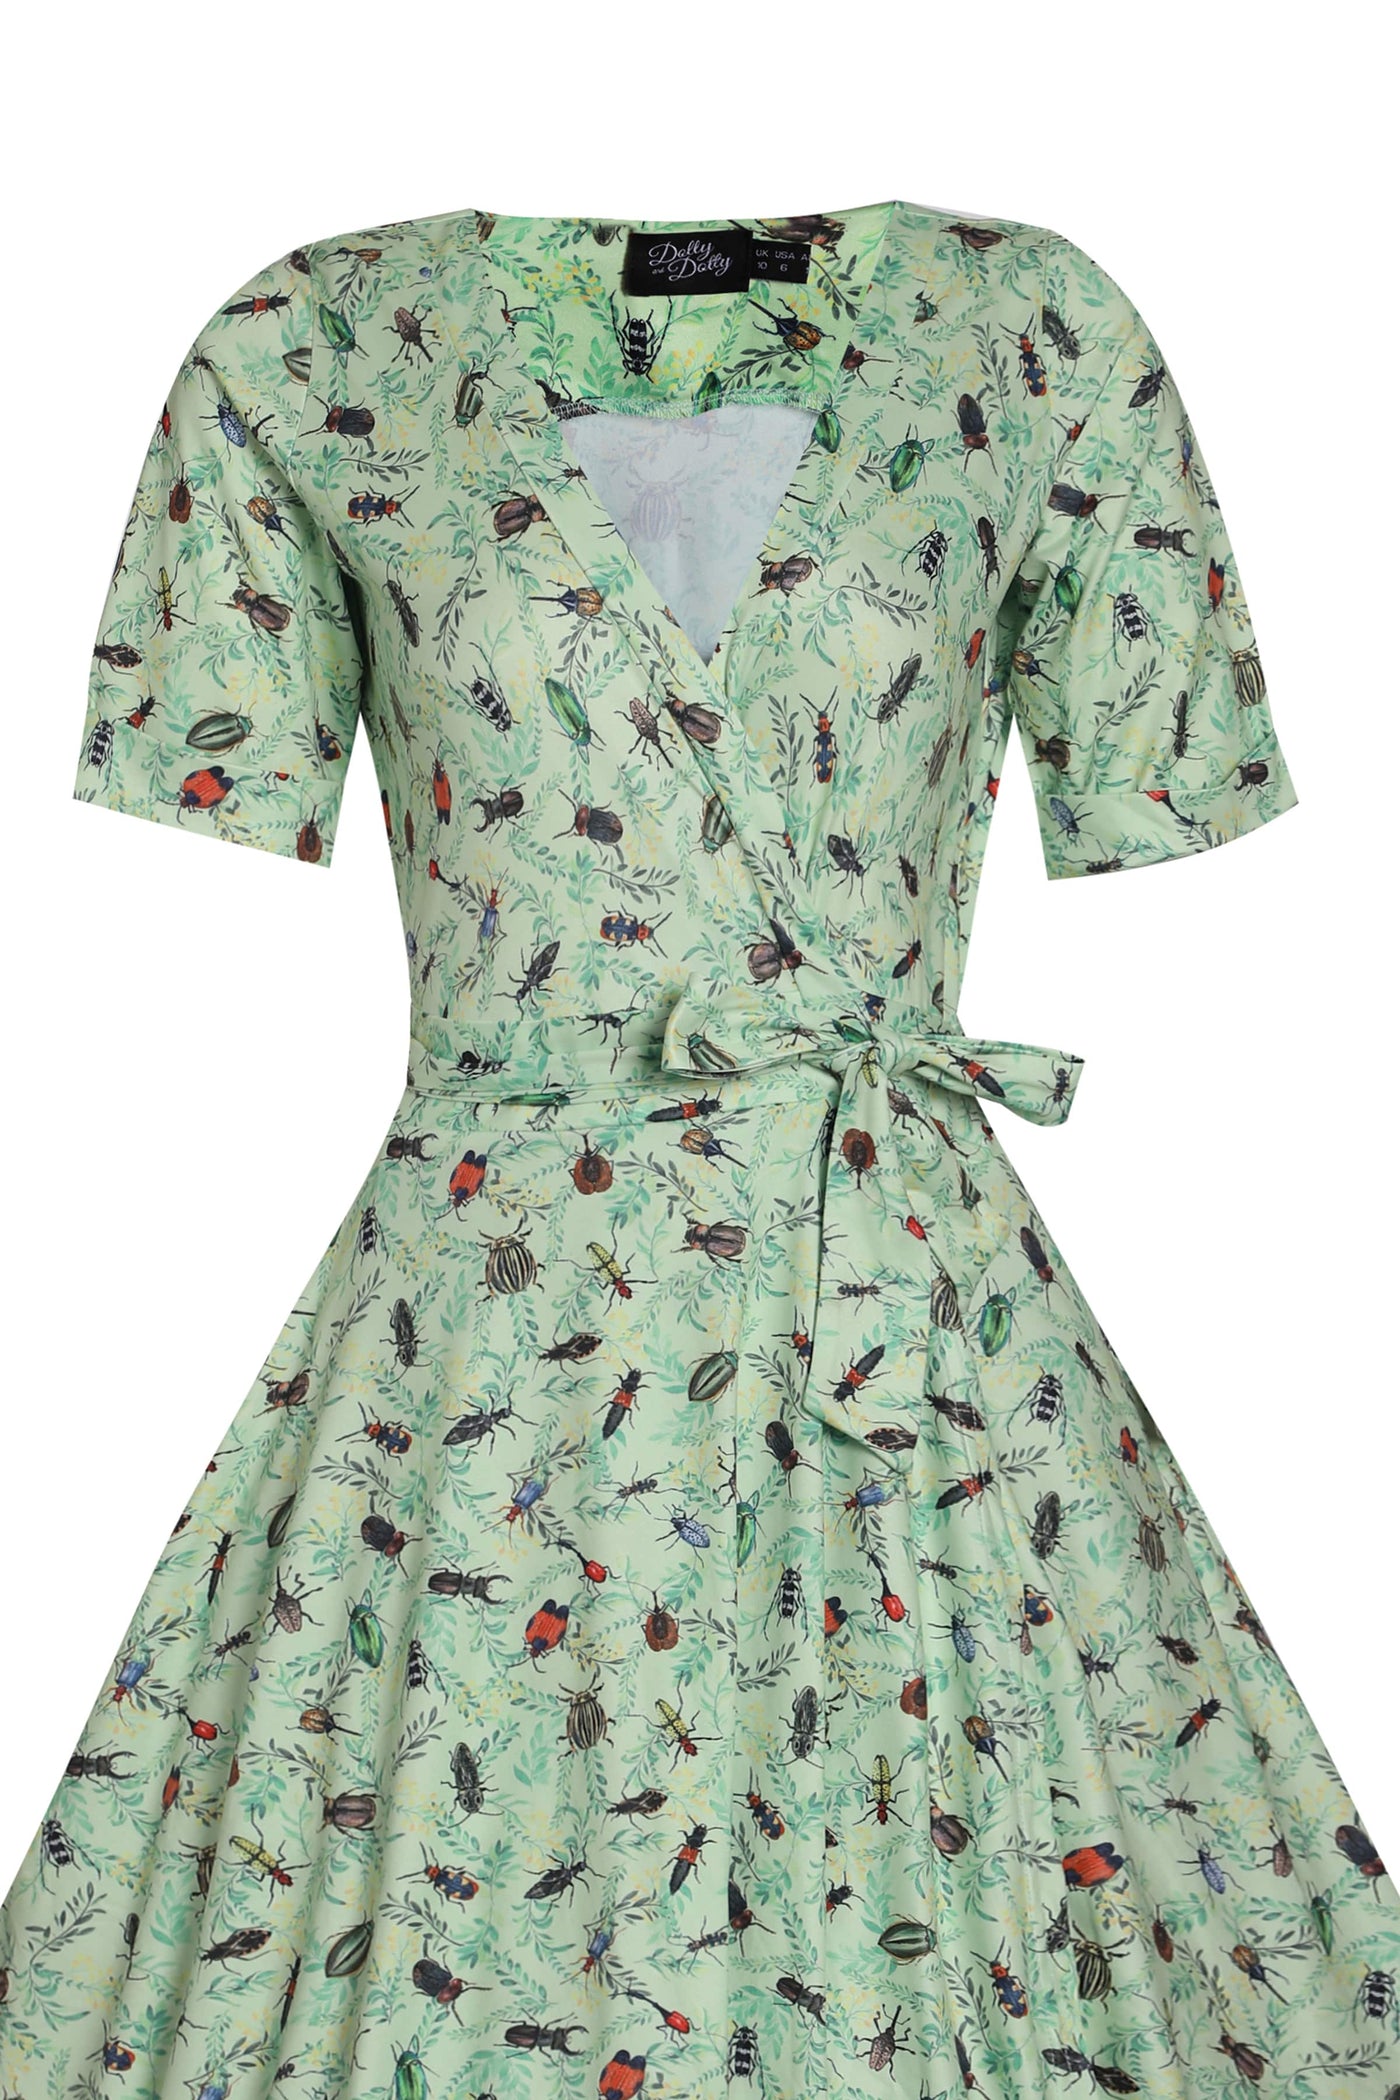 Matilda Green Mint Bug Wrap Dress with pockets close up